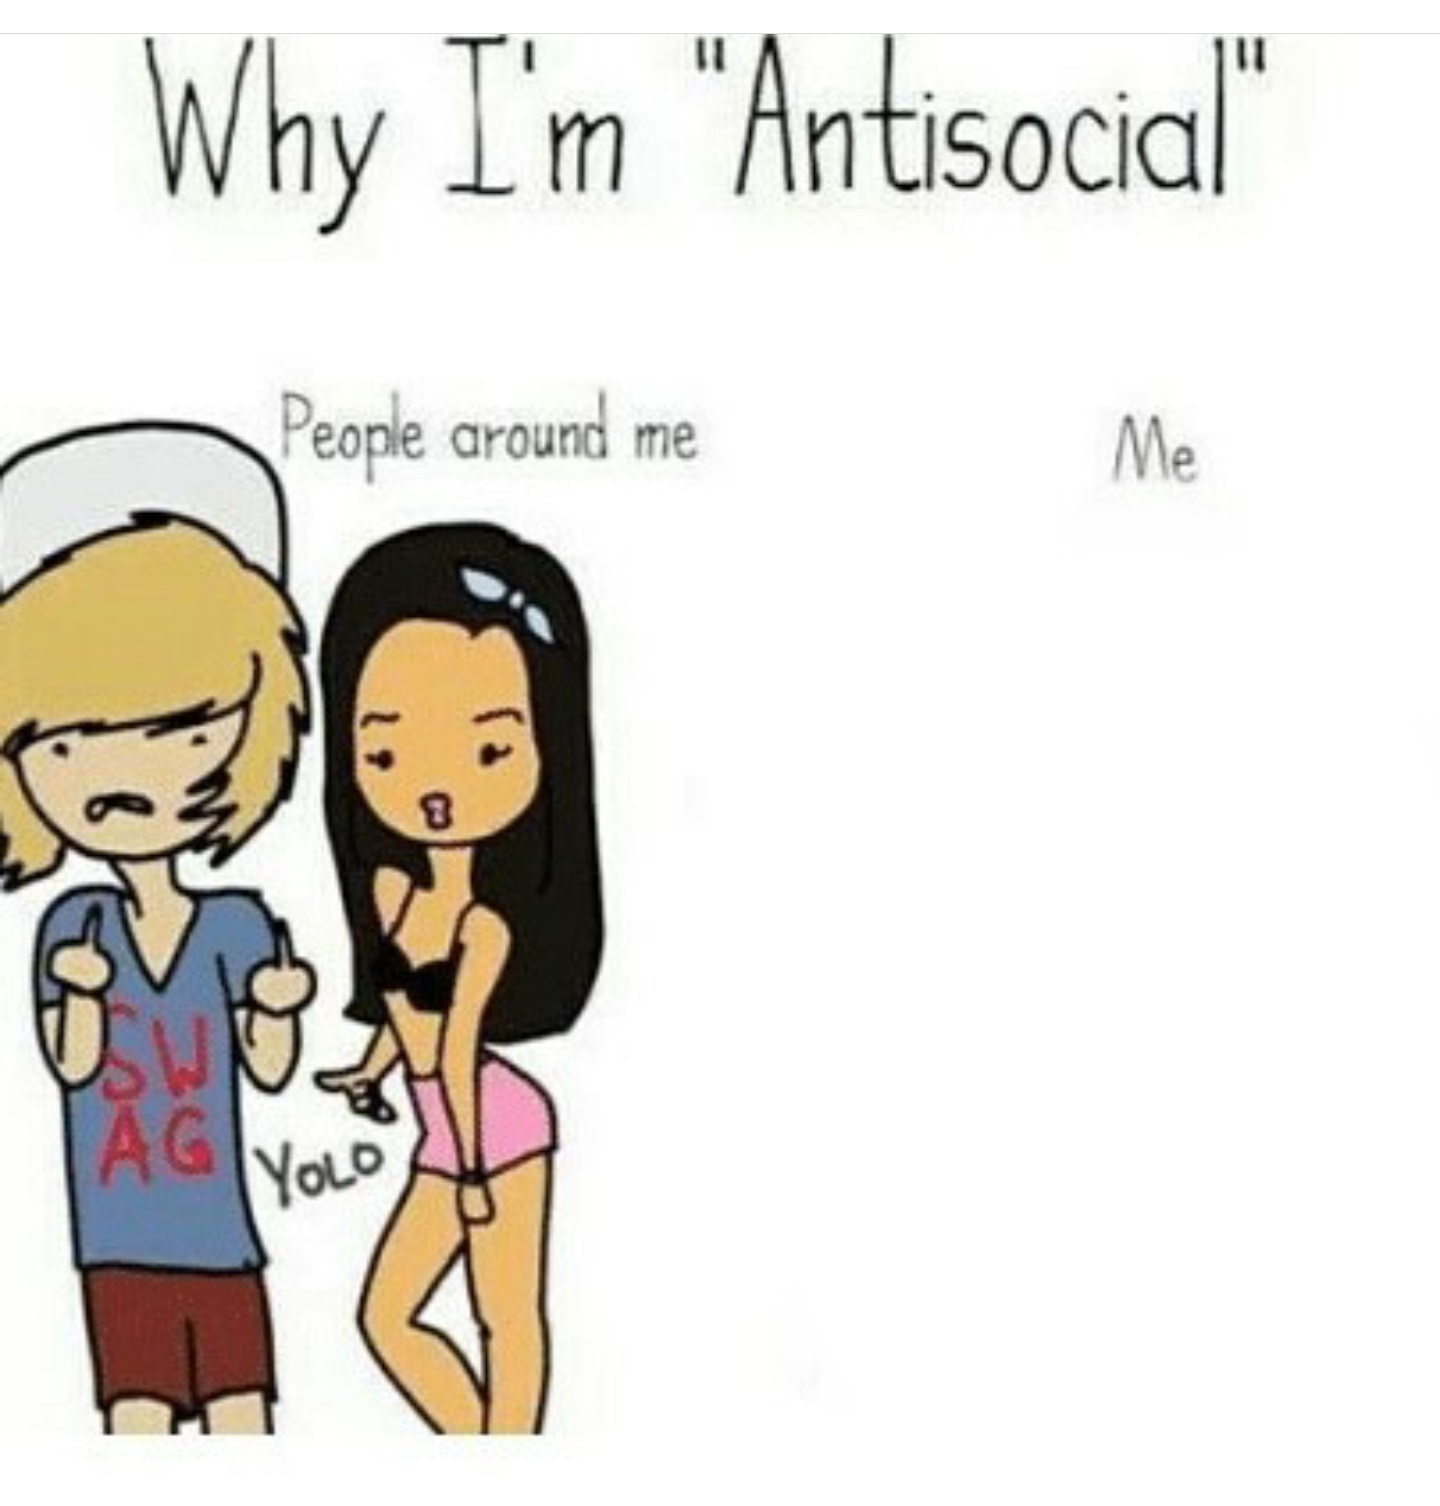 Around me на русском. Why i'm Antisocial. Why i am Antisocial. Why i'm "Antisocial" Мем. Why i am Antisocial meme.